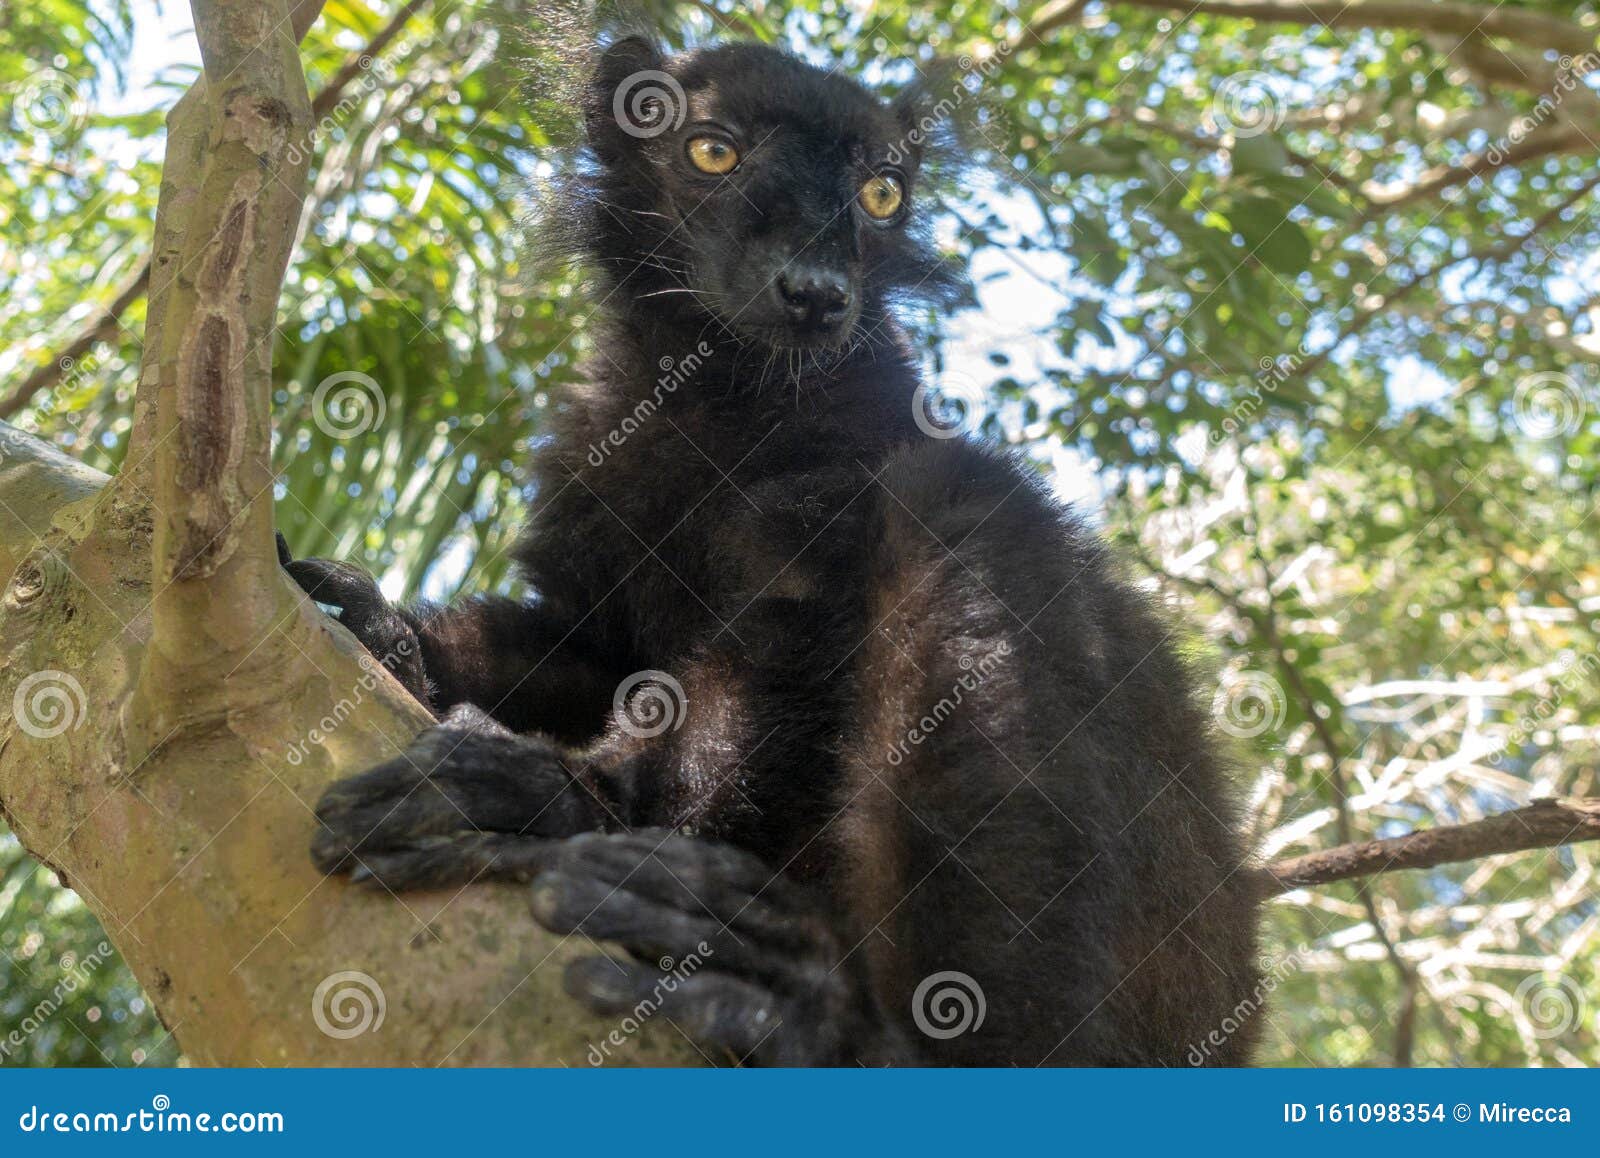 male black lemur, eulemur macaco, madagascar, africa.